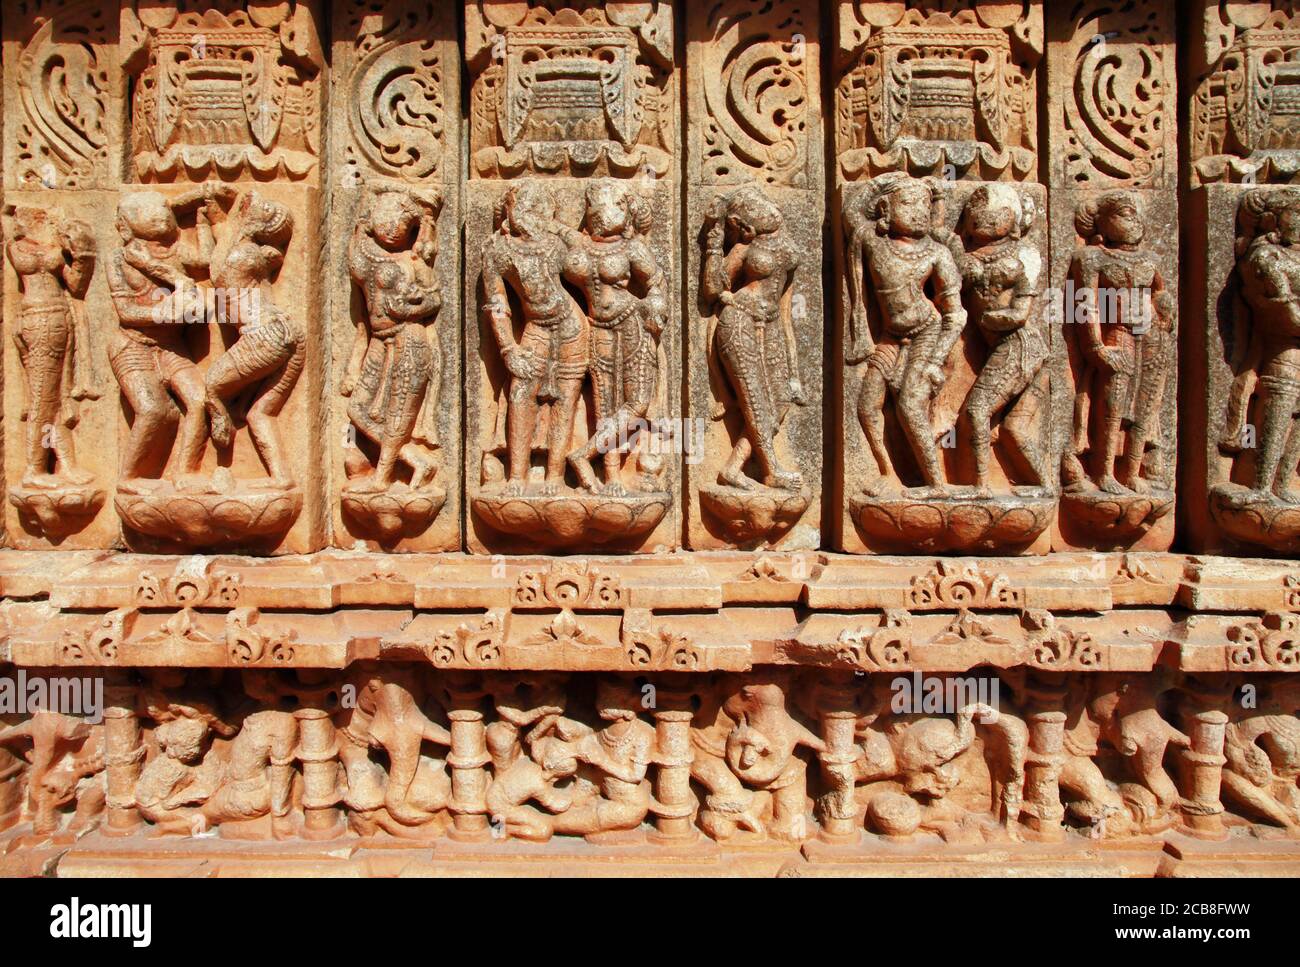 Sculptures murales en pierre dans le temple indien Sahastra Bahu (SAS-Bahu) à Nagda, Udaipur, Rajasthan, Inde. Banque D'Images